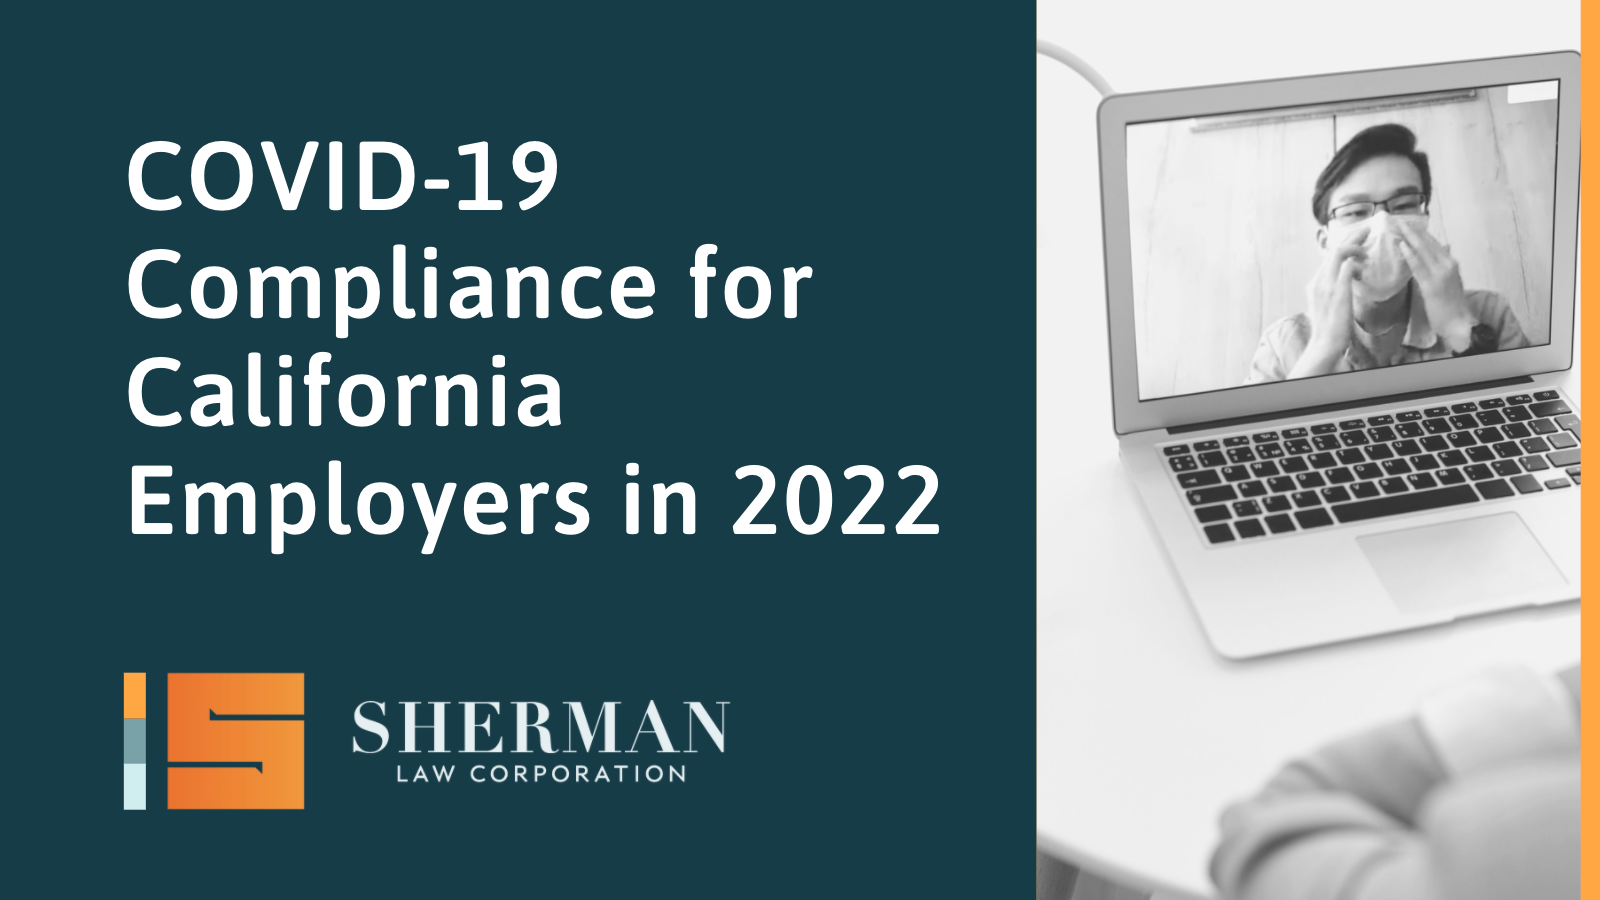 COVID-19 Compliance for California Employers in 2022 - callifornia employment law - sherman law corporation